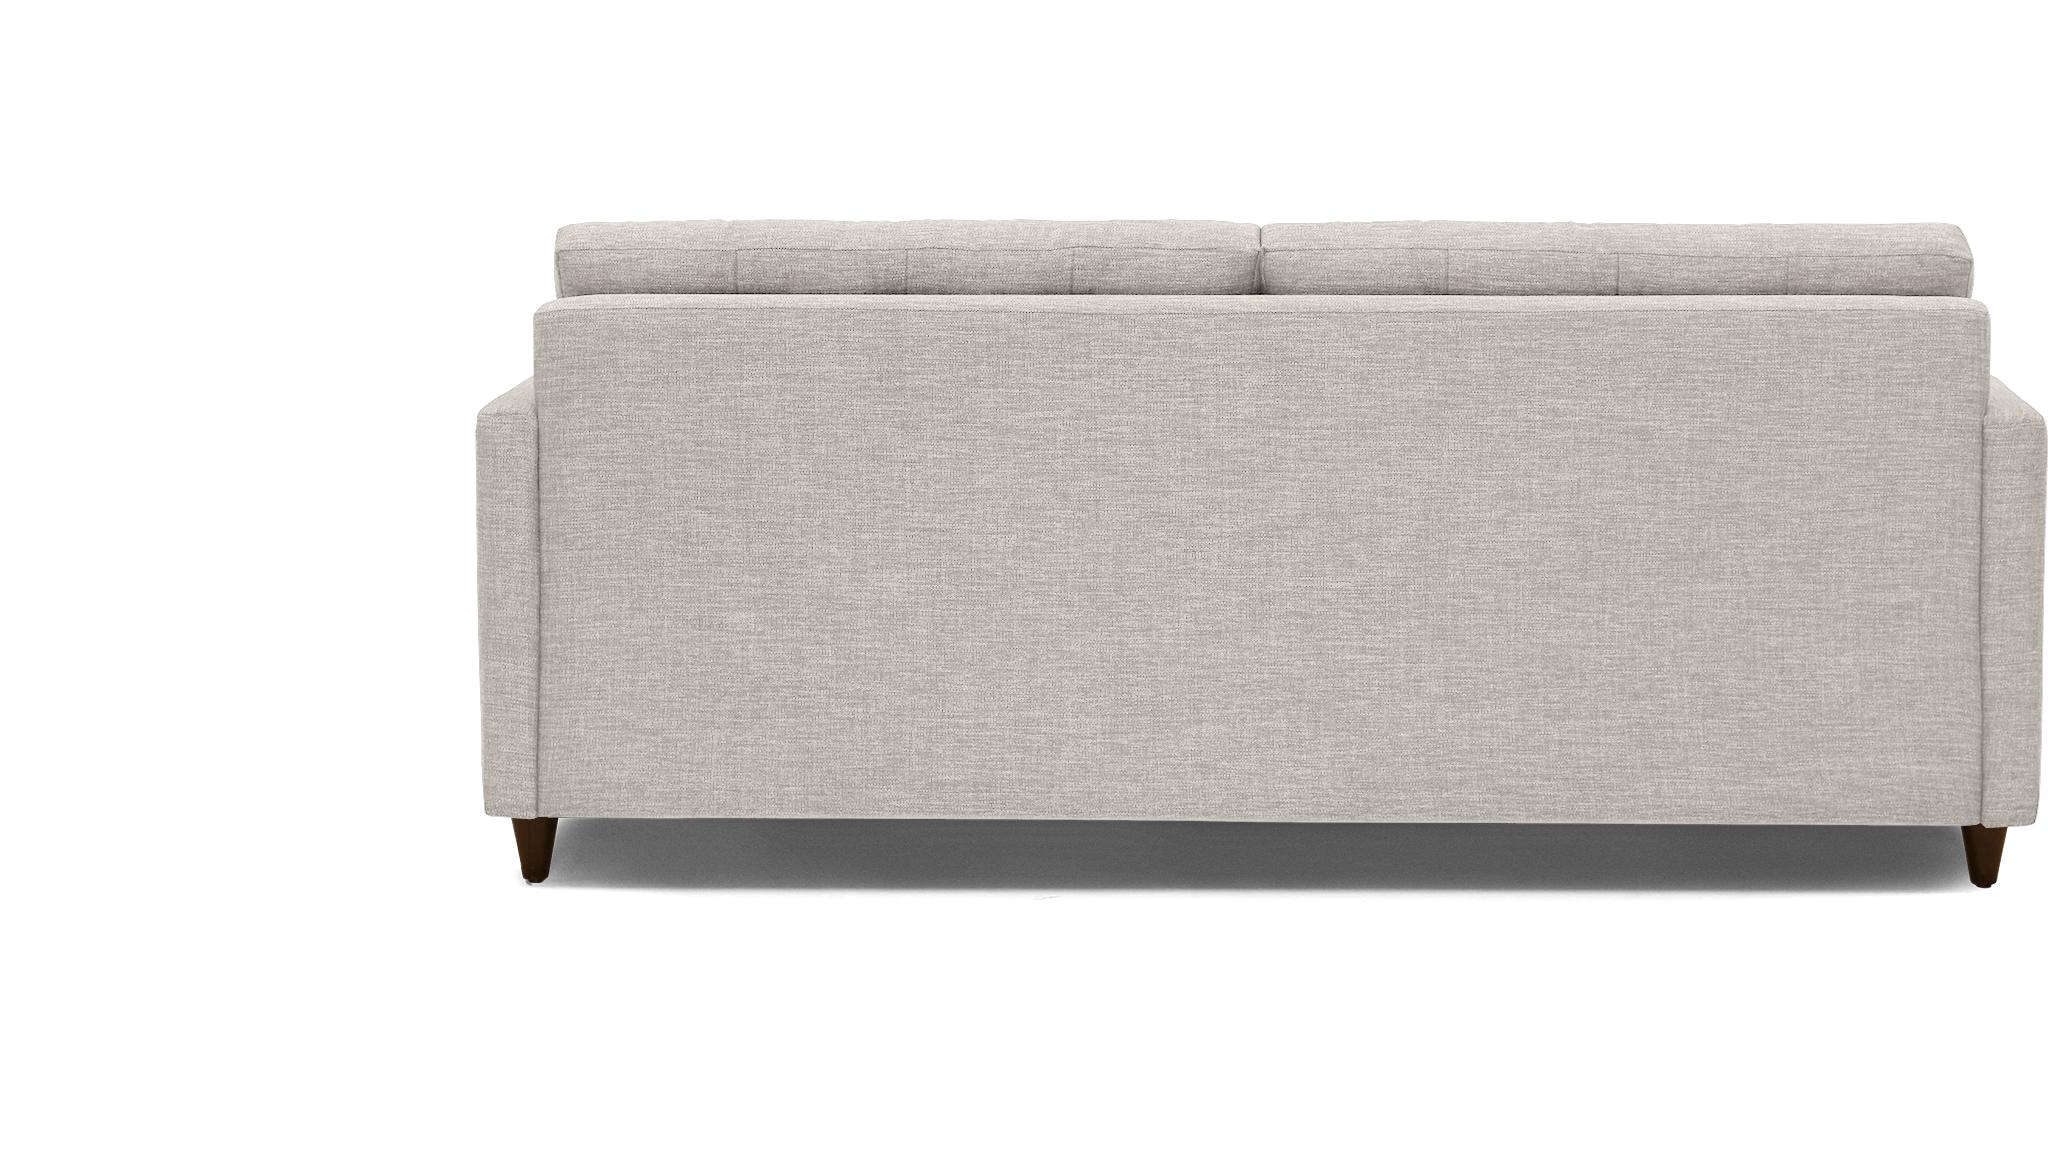 Beige/White Eliot Mid Century Modern Sleeper Sofa - Prime Stone - Mocha - Foam - Image 4